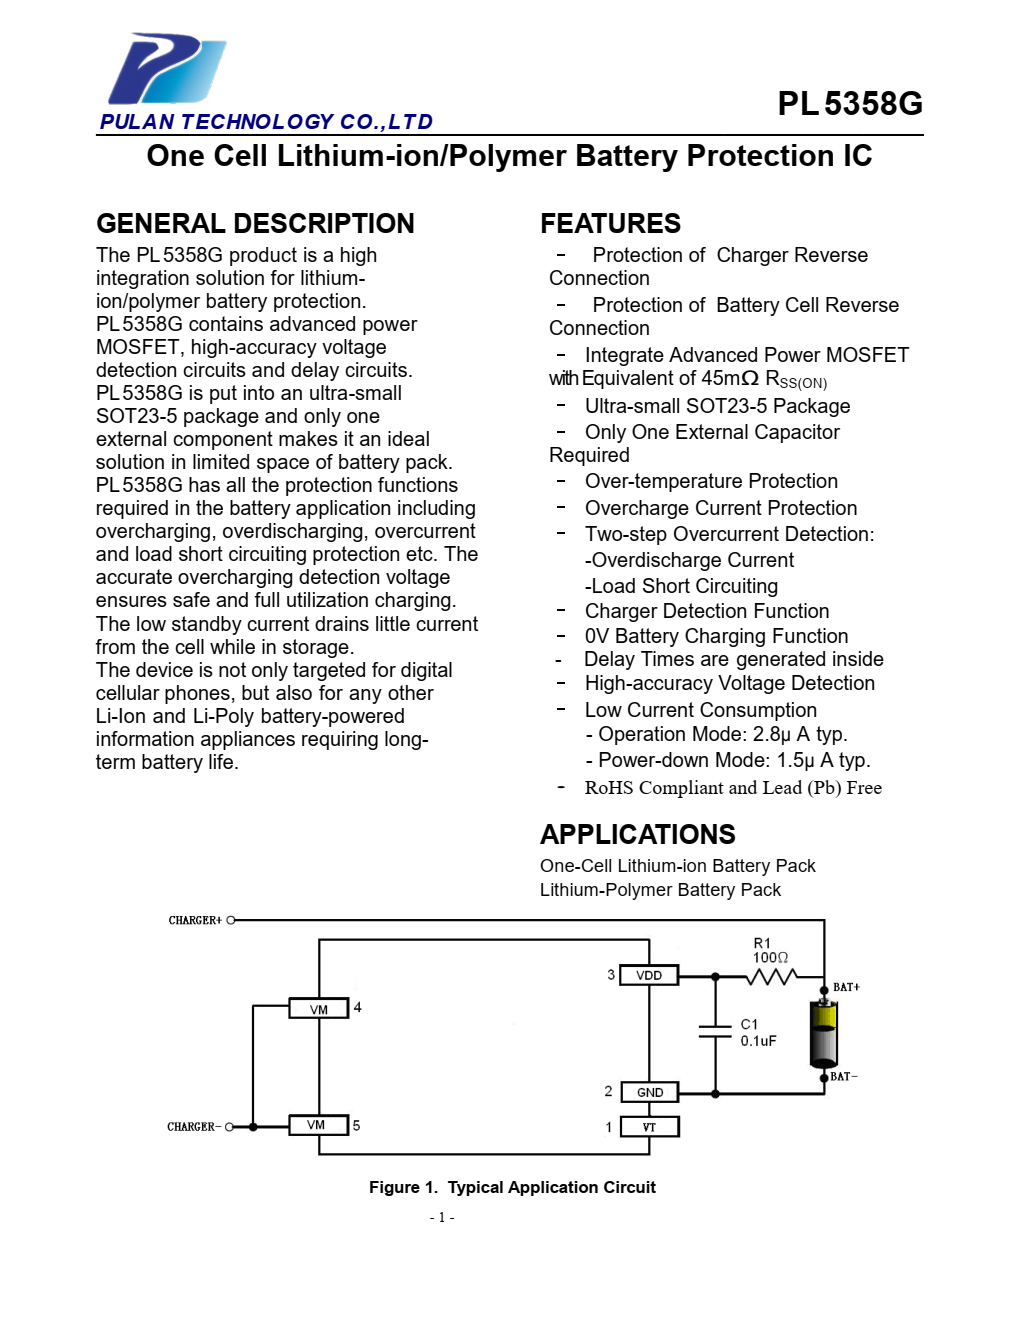 PL5358G产品是一款高端产品  锂离子/聚合物电池保护的集成解决方案